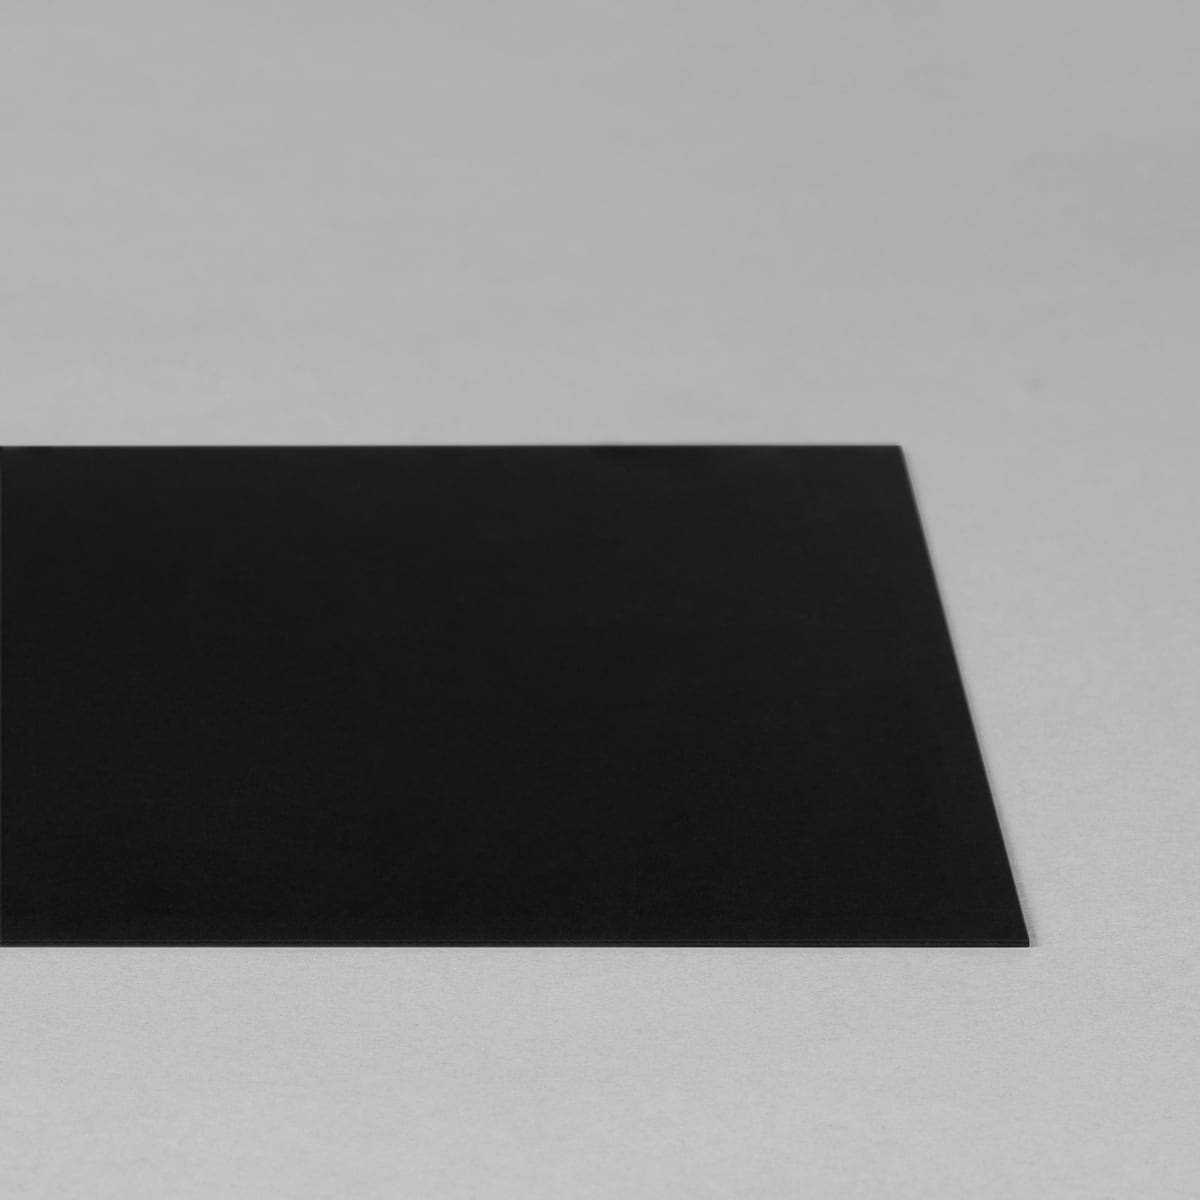 Karton burano black | Schwarz